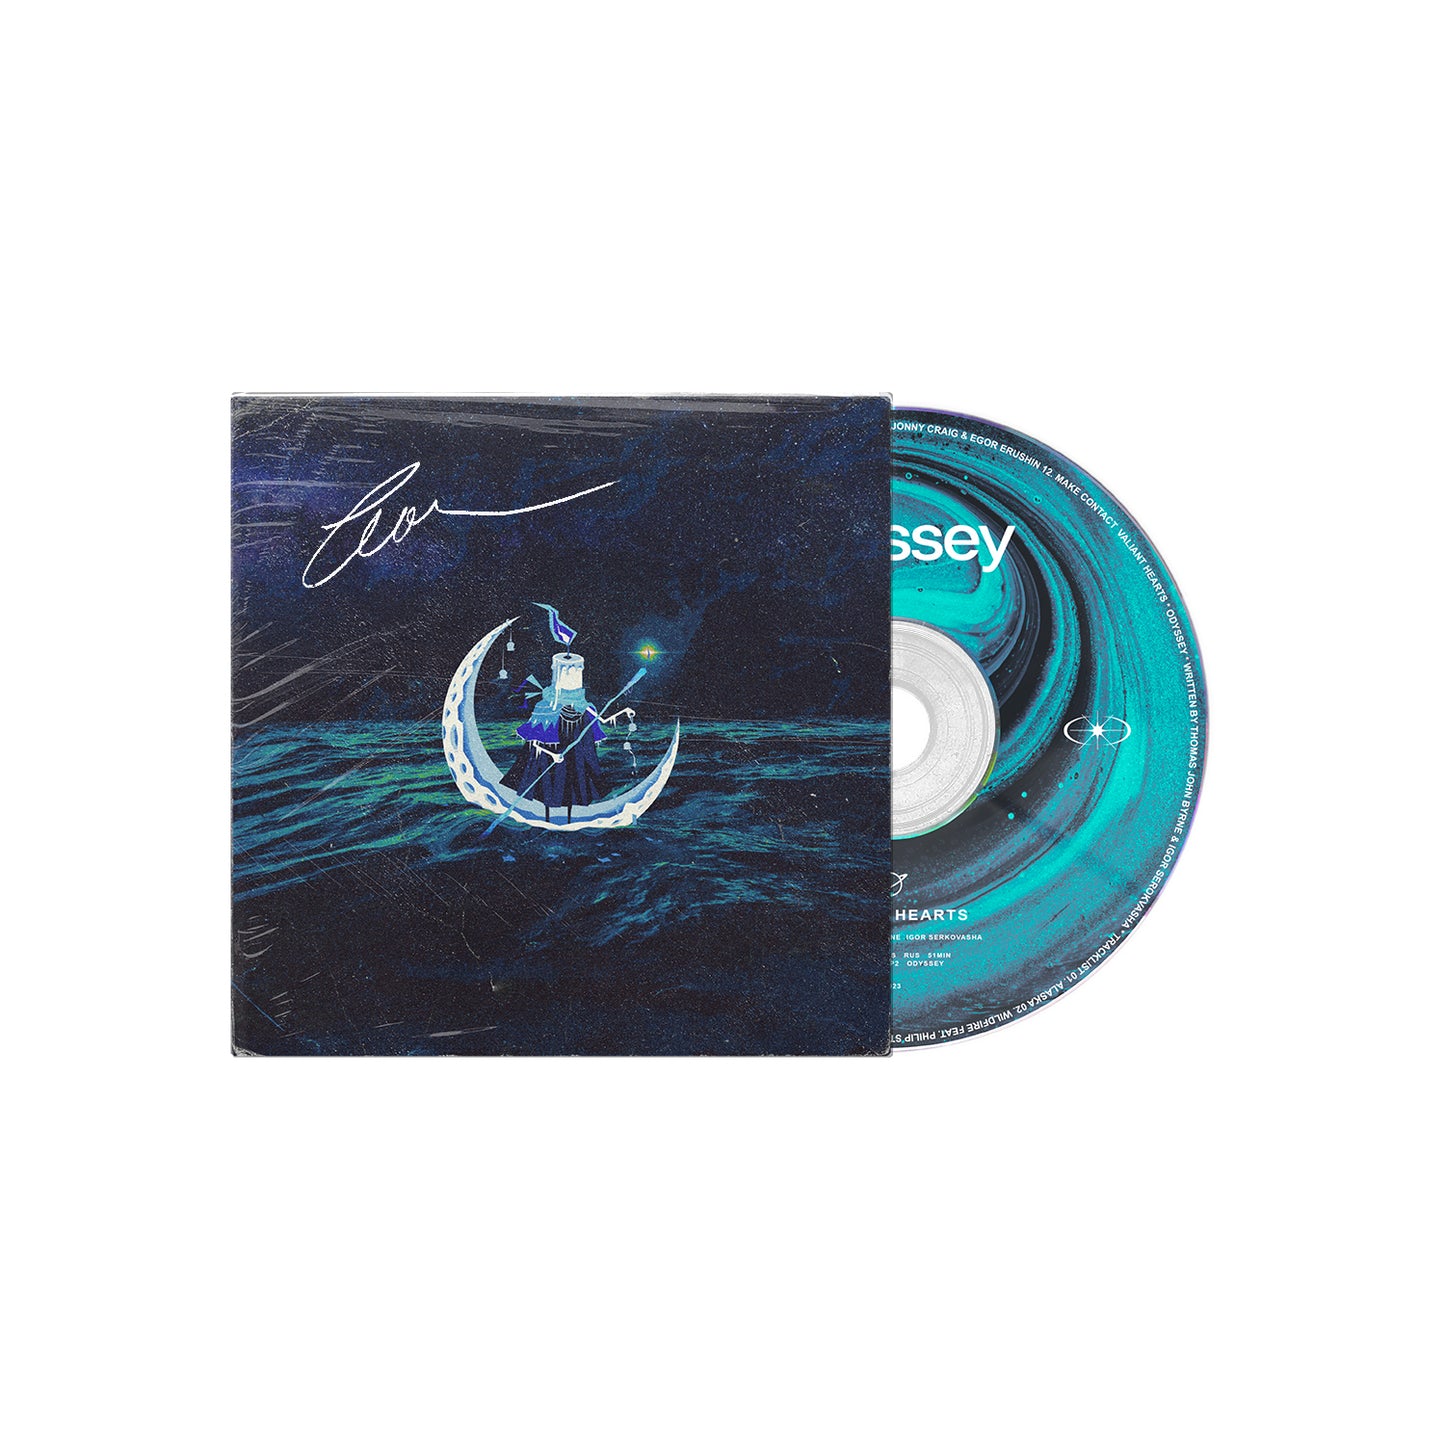 Odyssey Signed CD